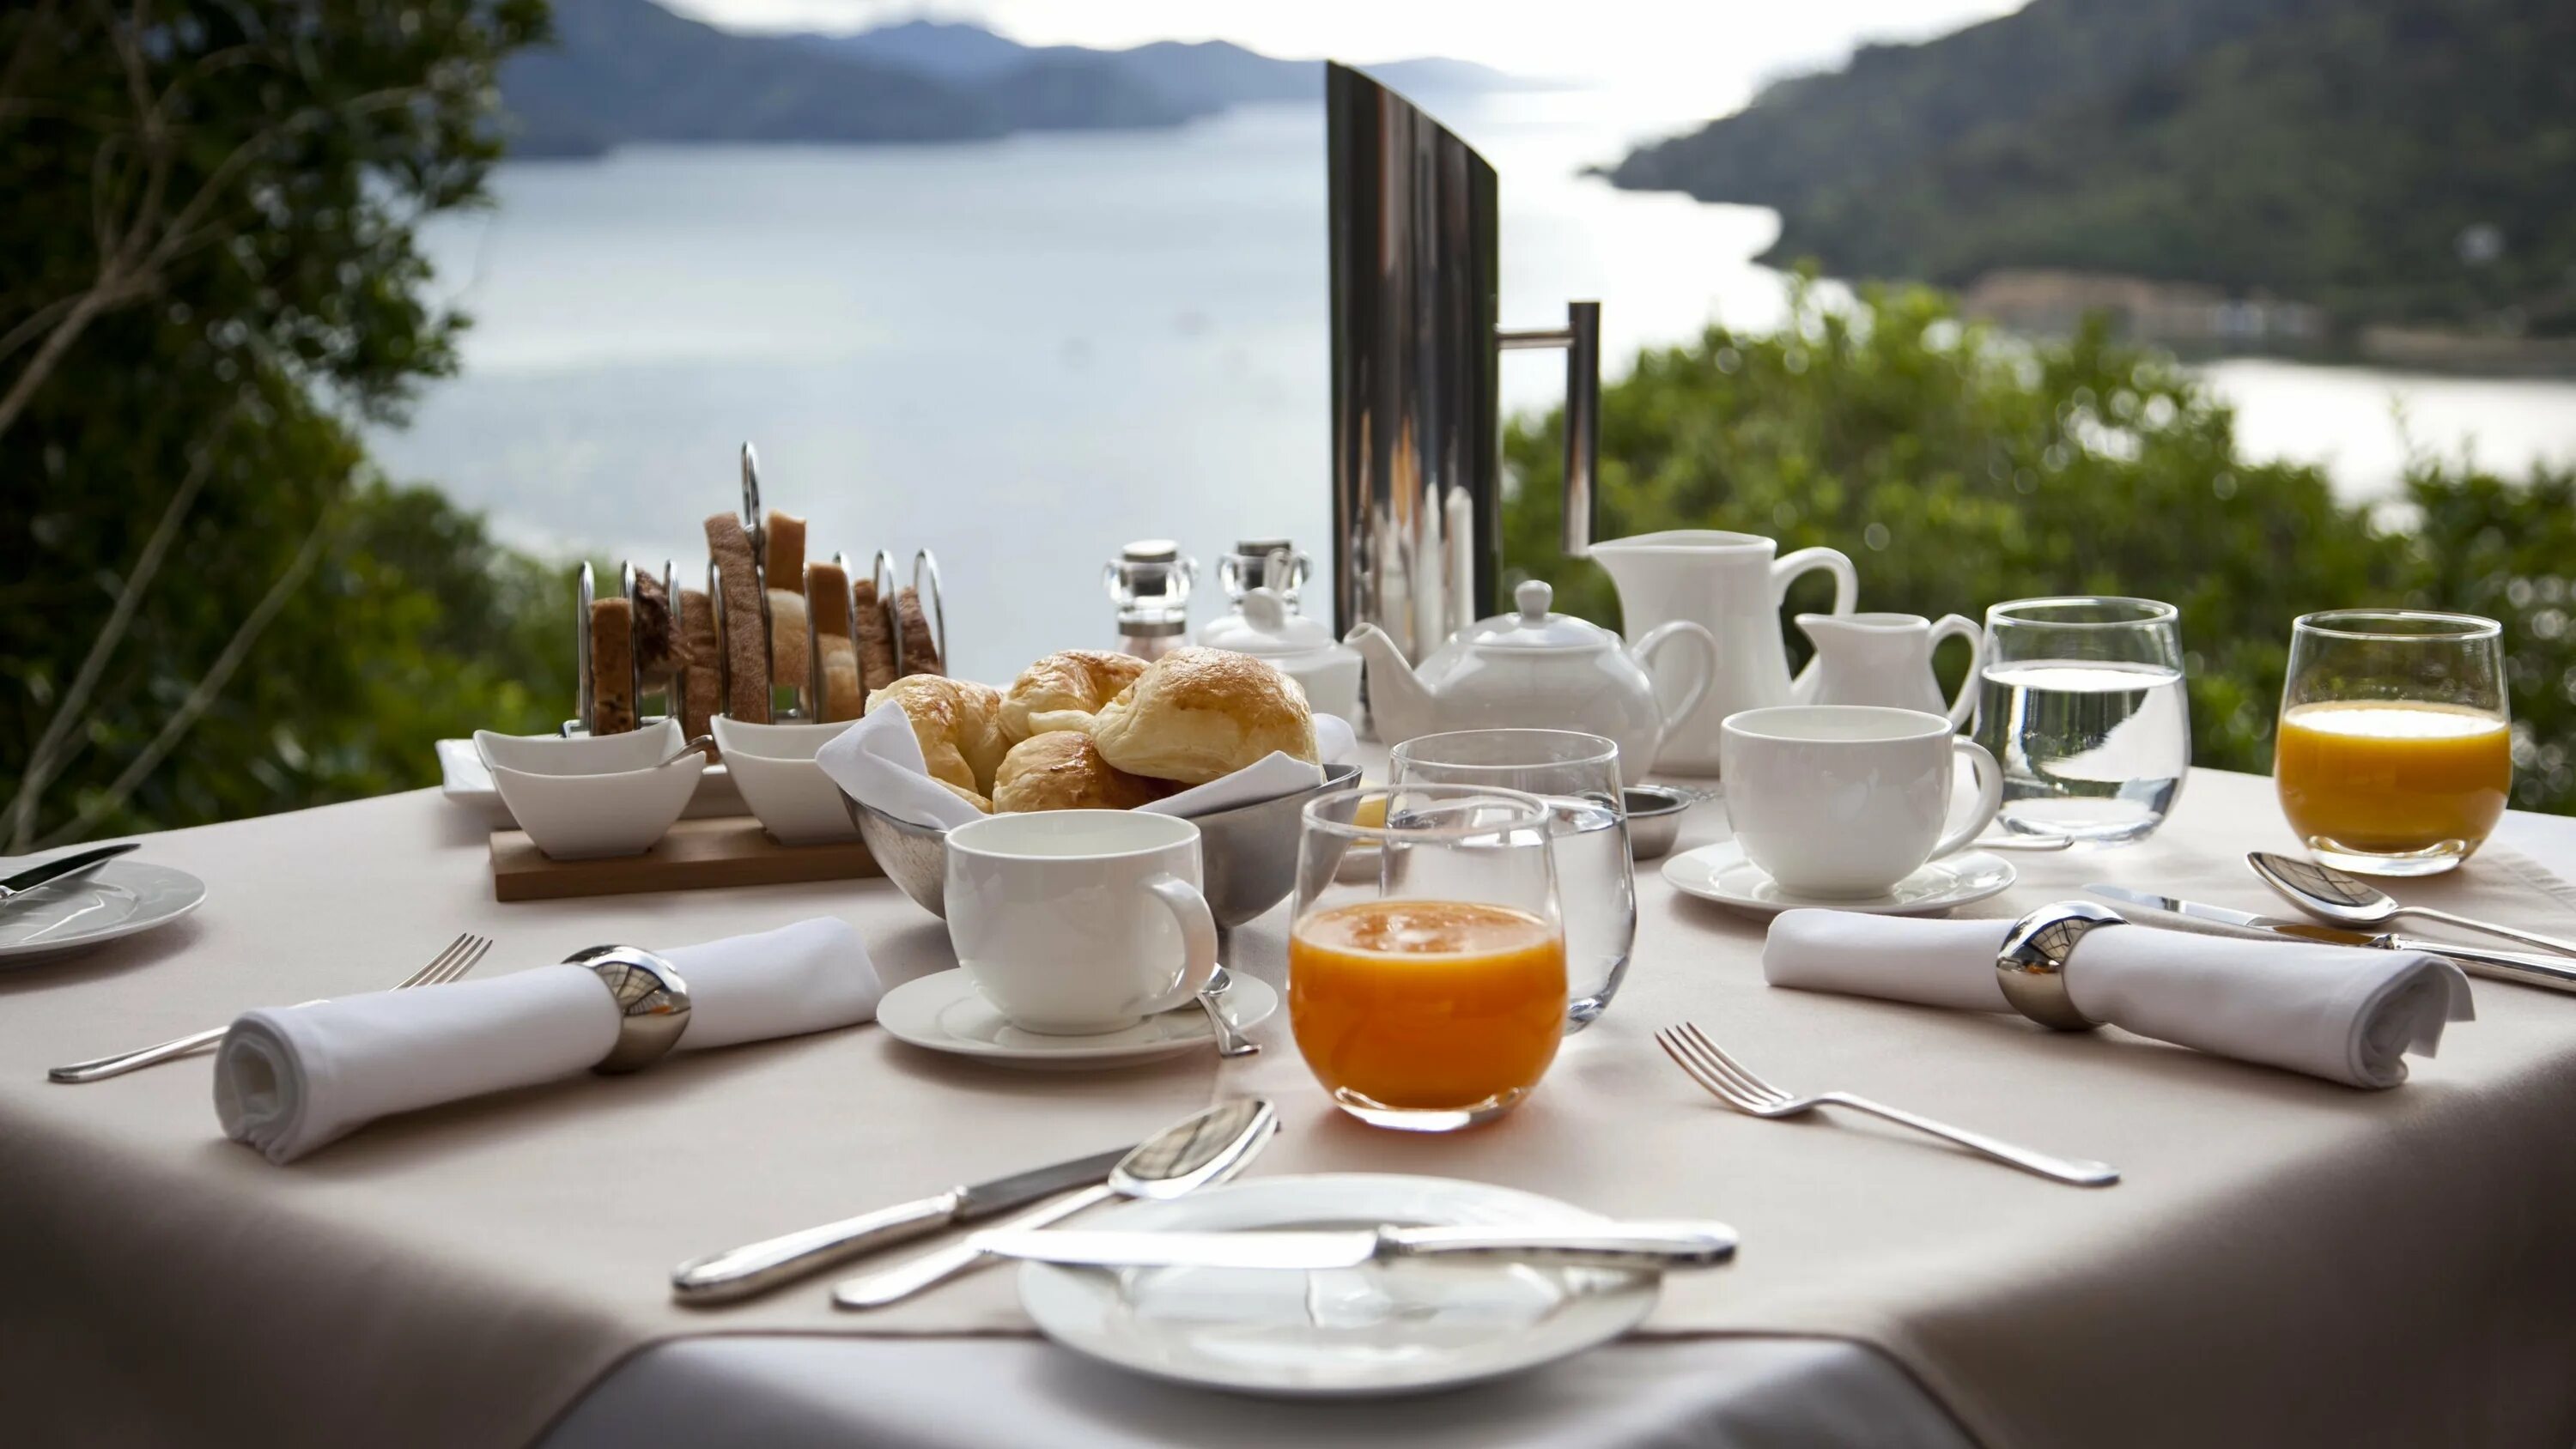 Завтрак на природе. Красивый завтрак. Красиво сервированный стол. Красивая сервировка завтрака.